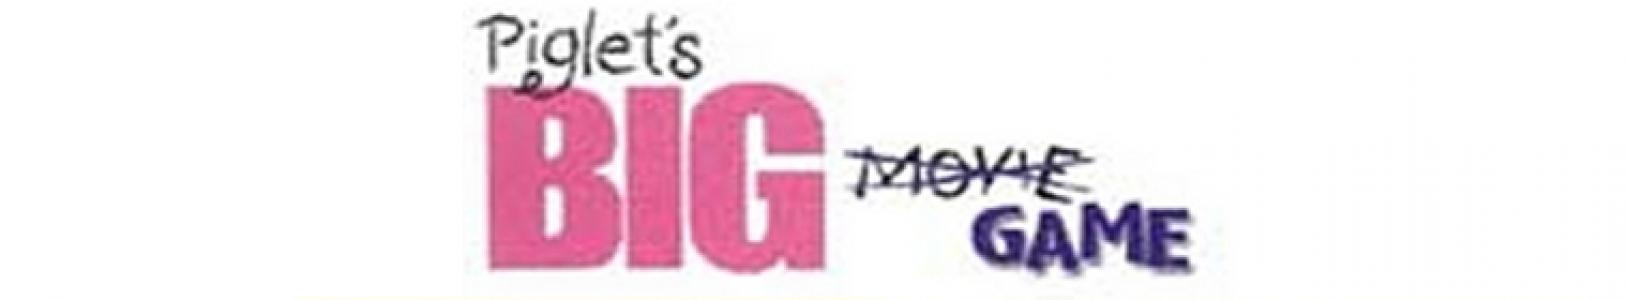 Disney Piglet's Big Game banner